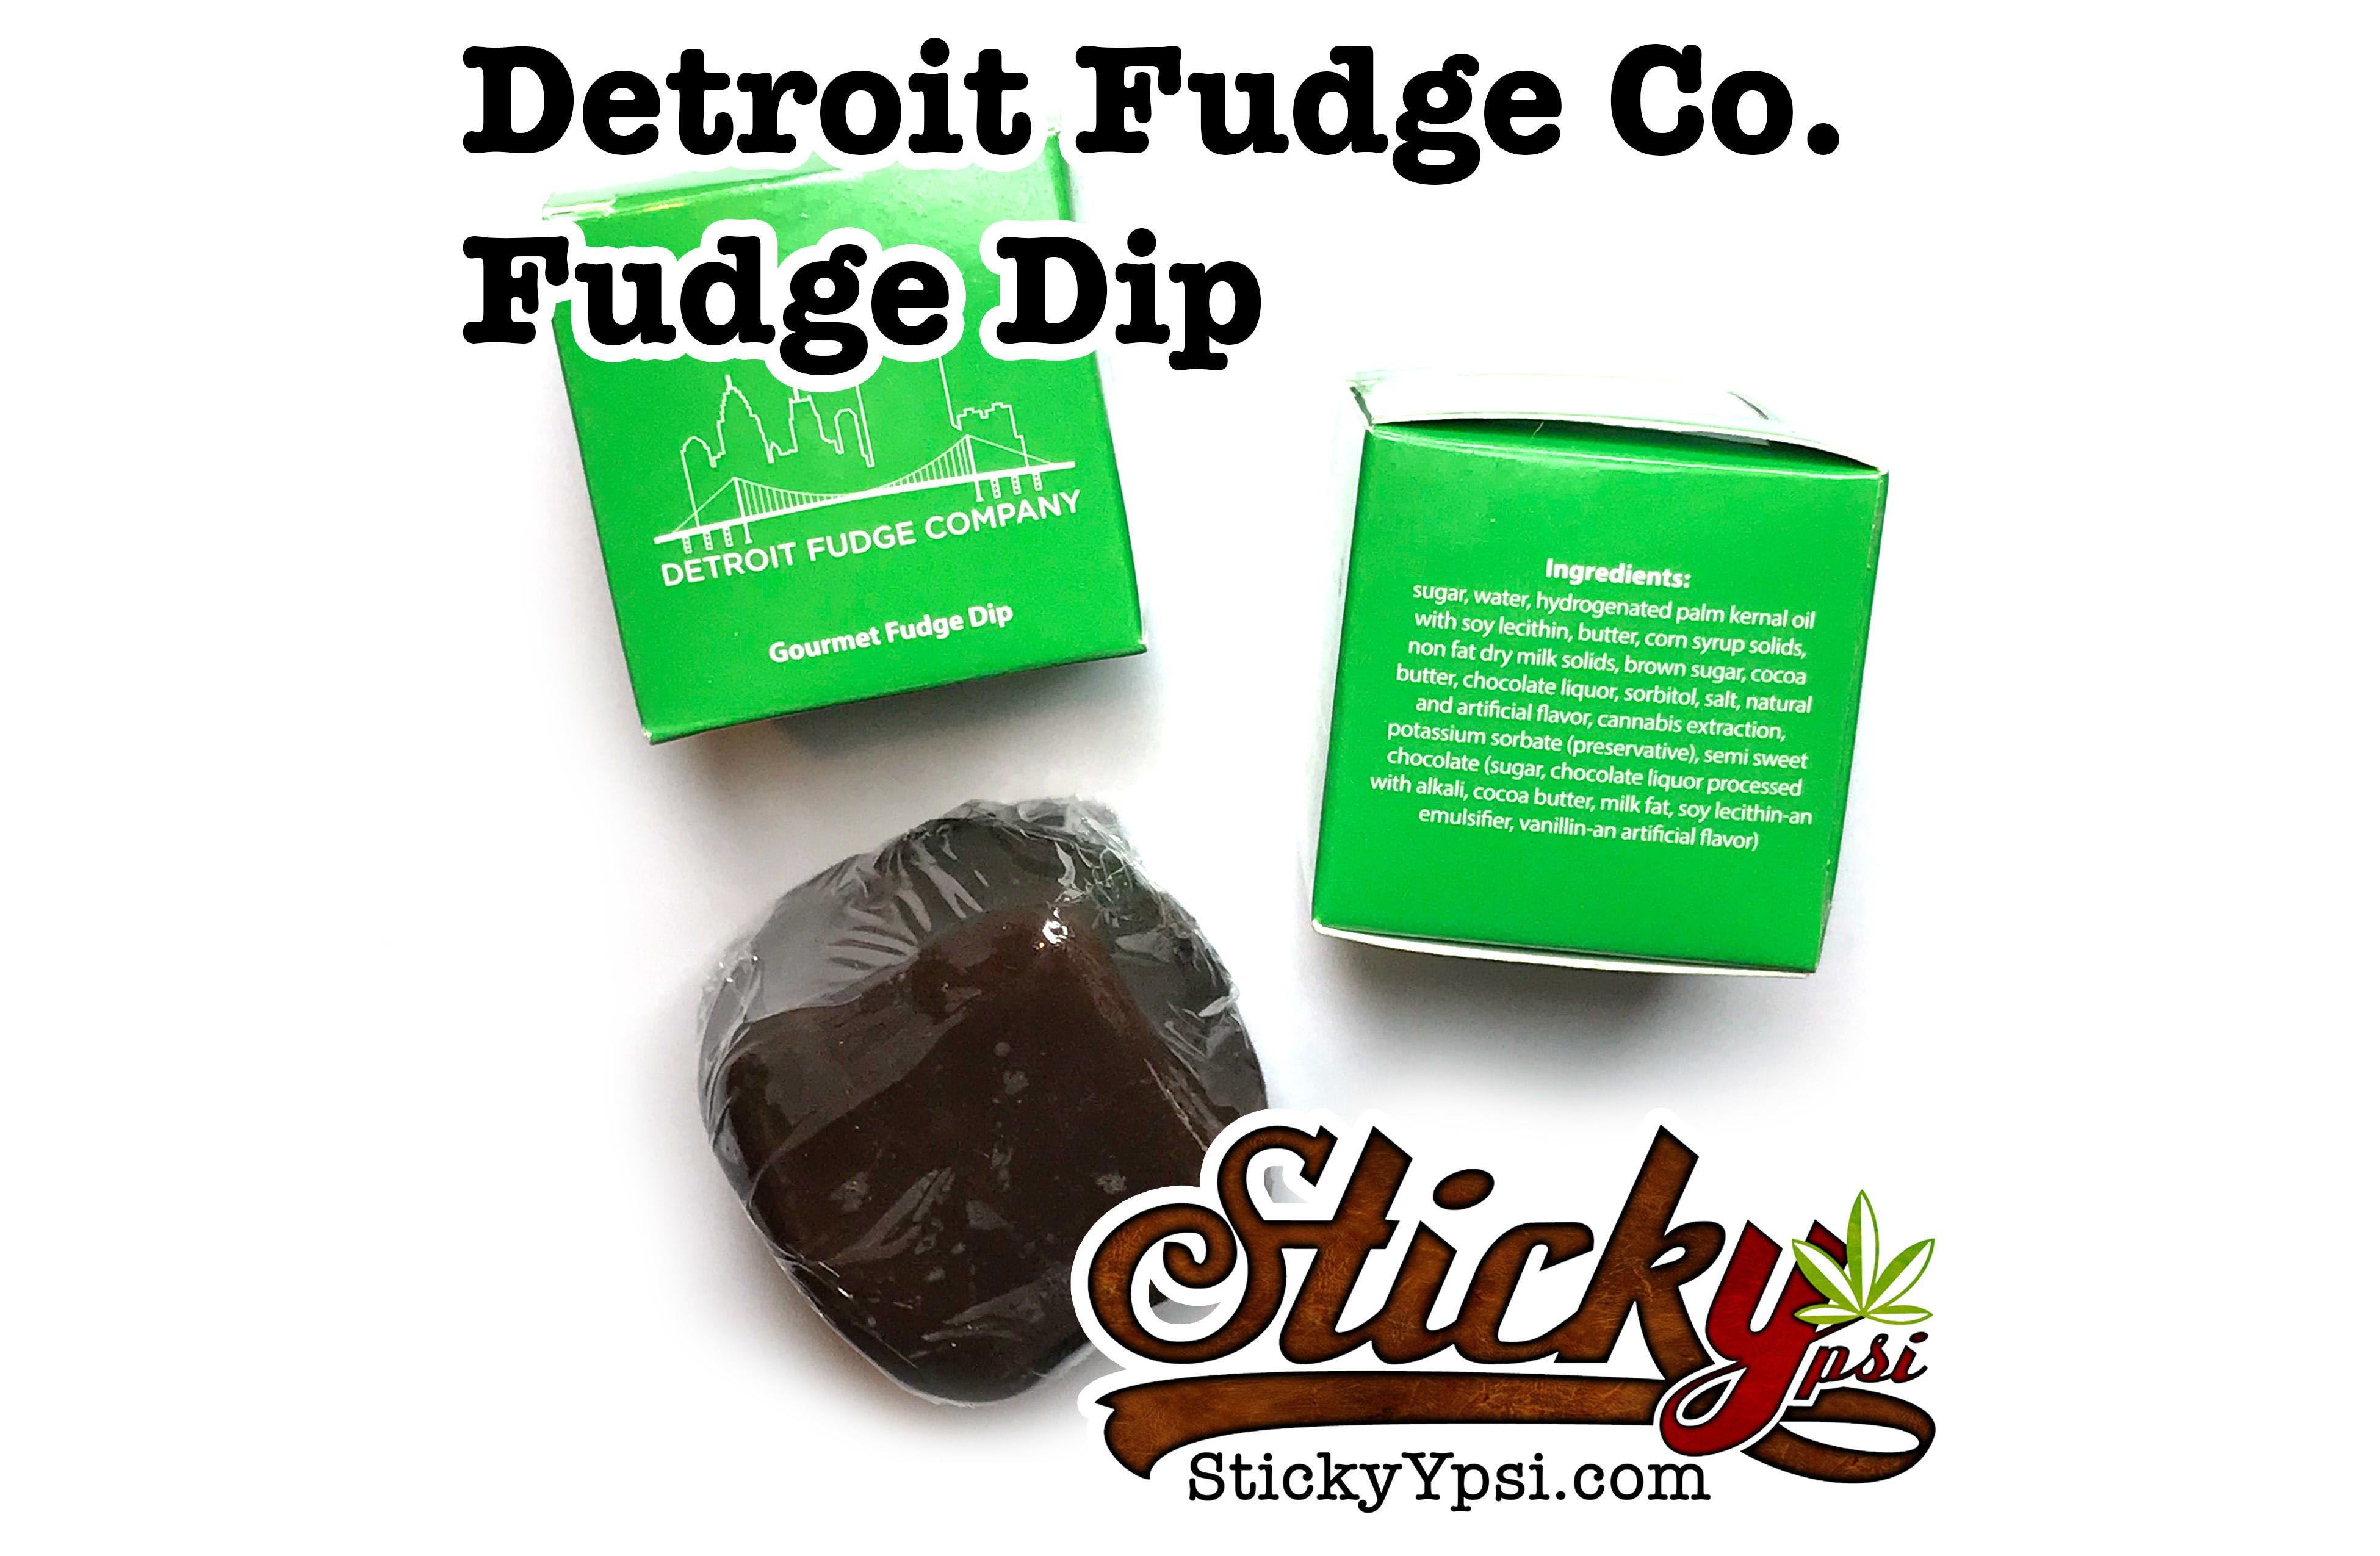 edible-detroit-fudge-company-detroit-fudge-fudge-dips-50mg